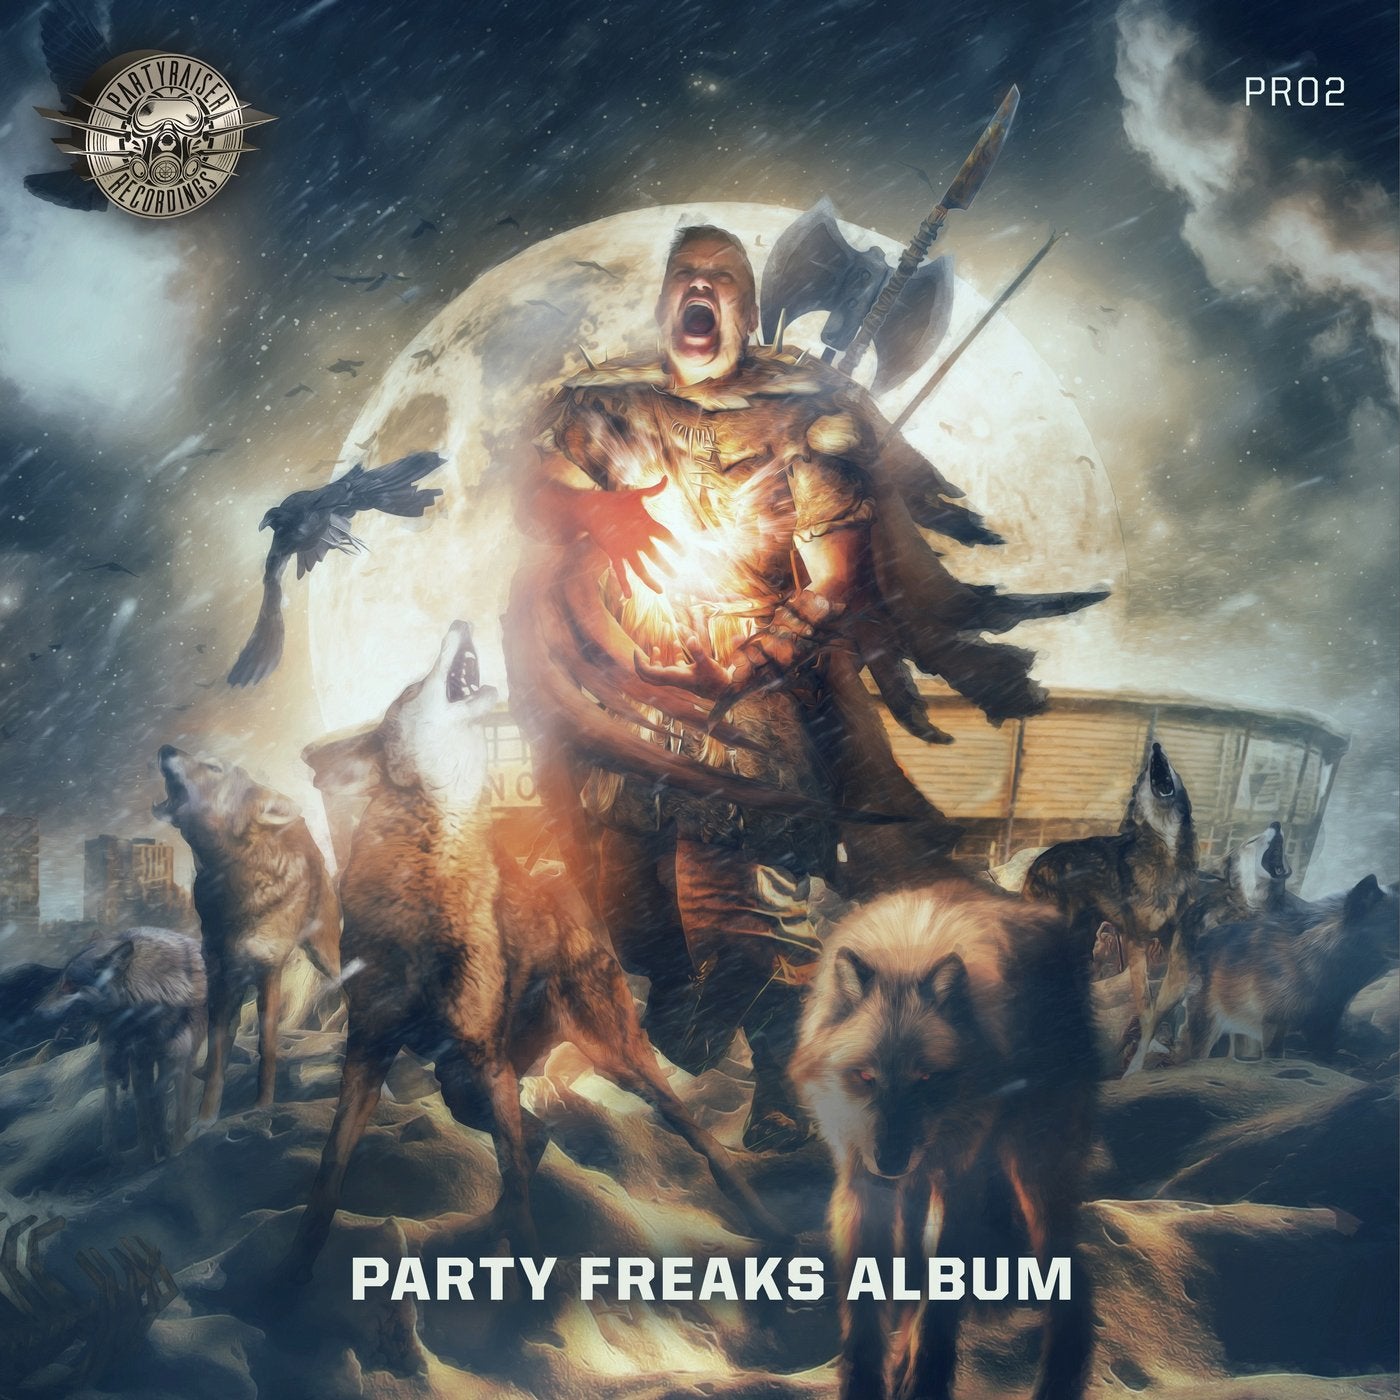 Party Freaks Album